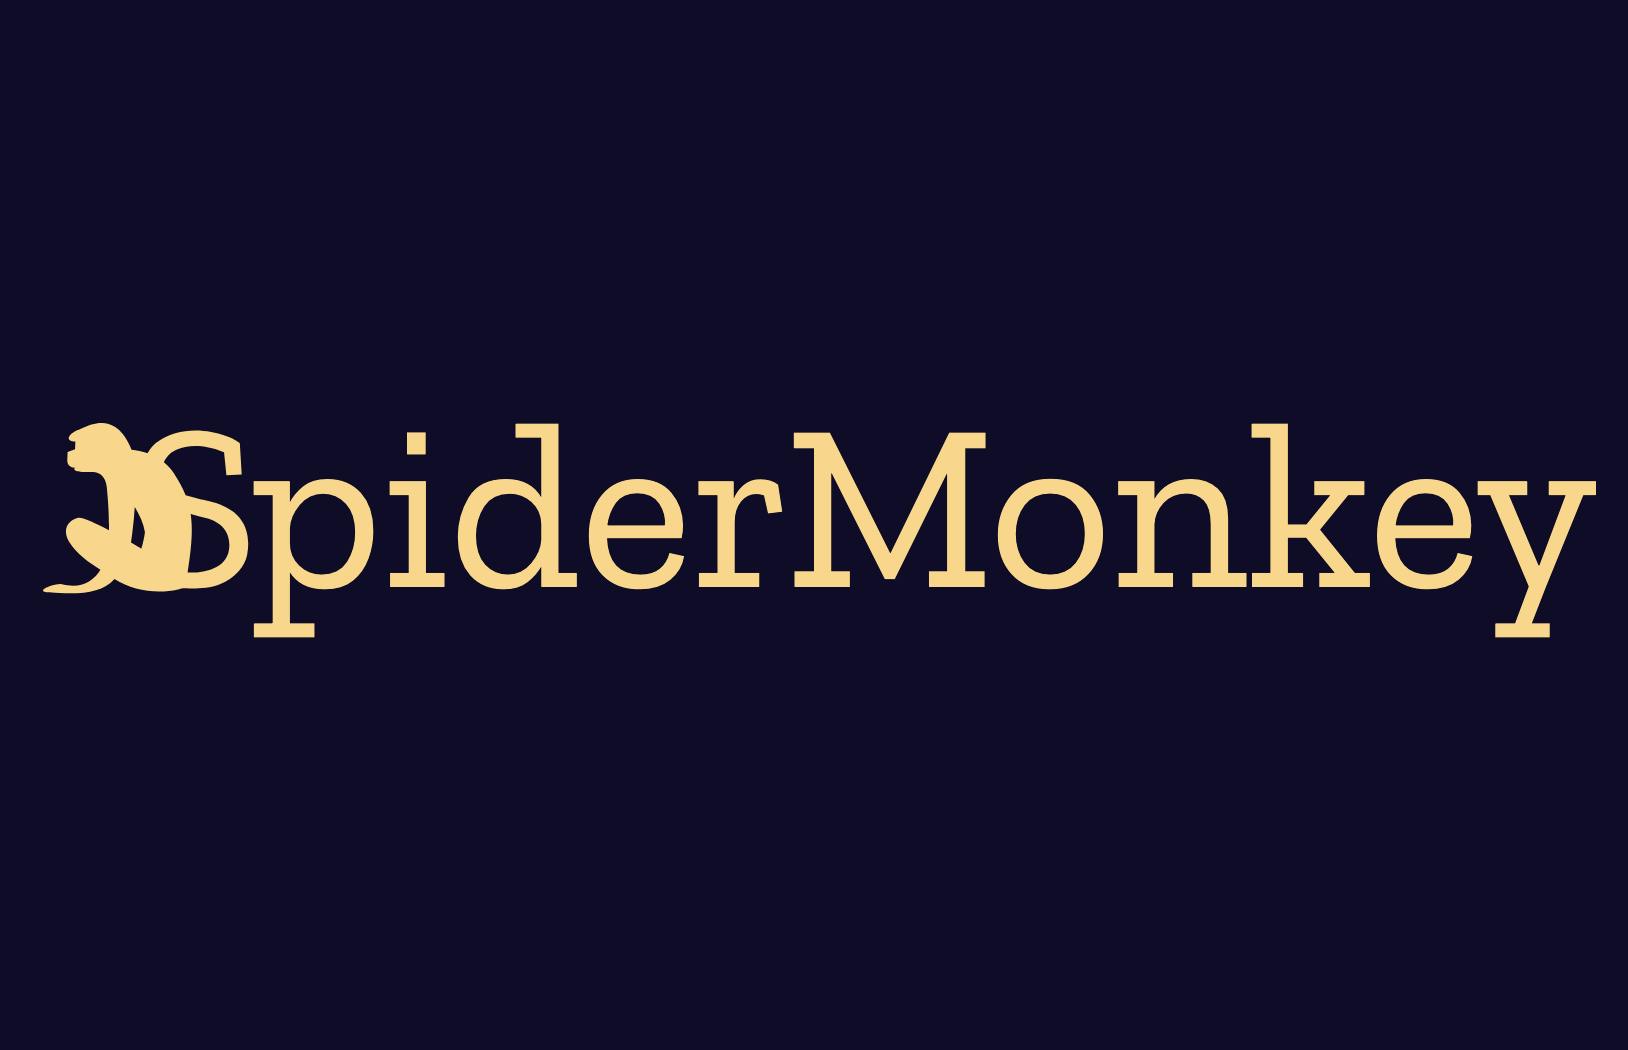 spider monkey logo.png